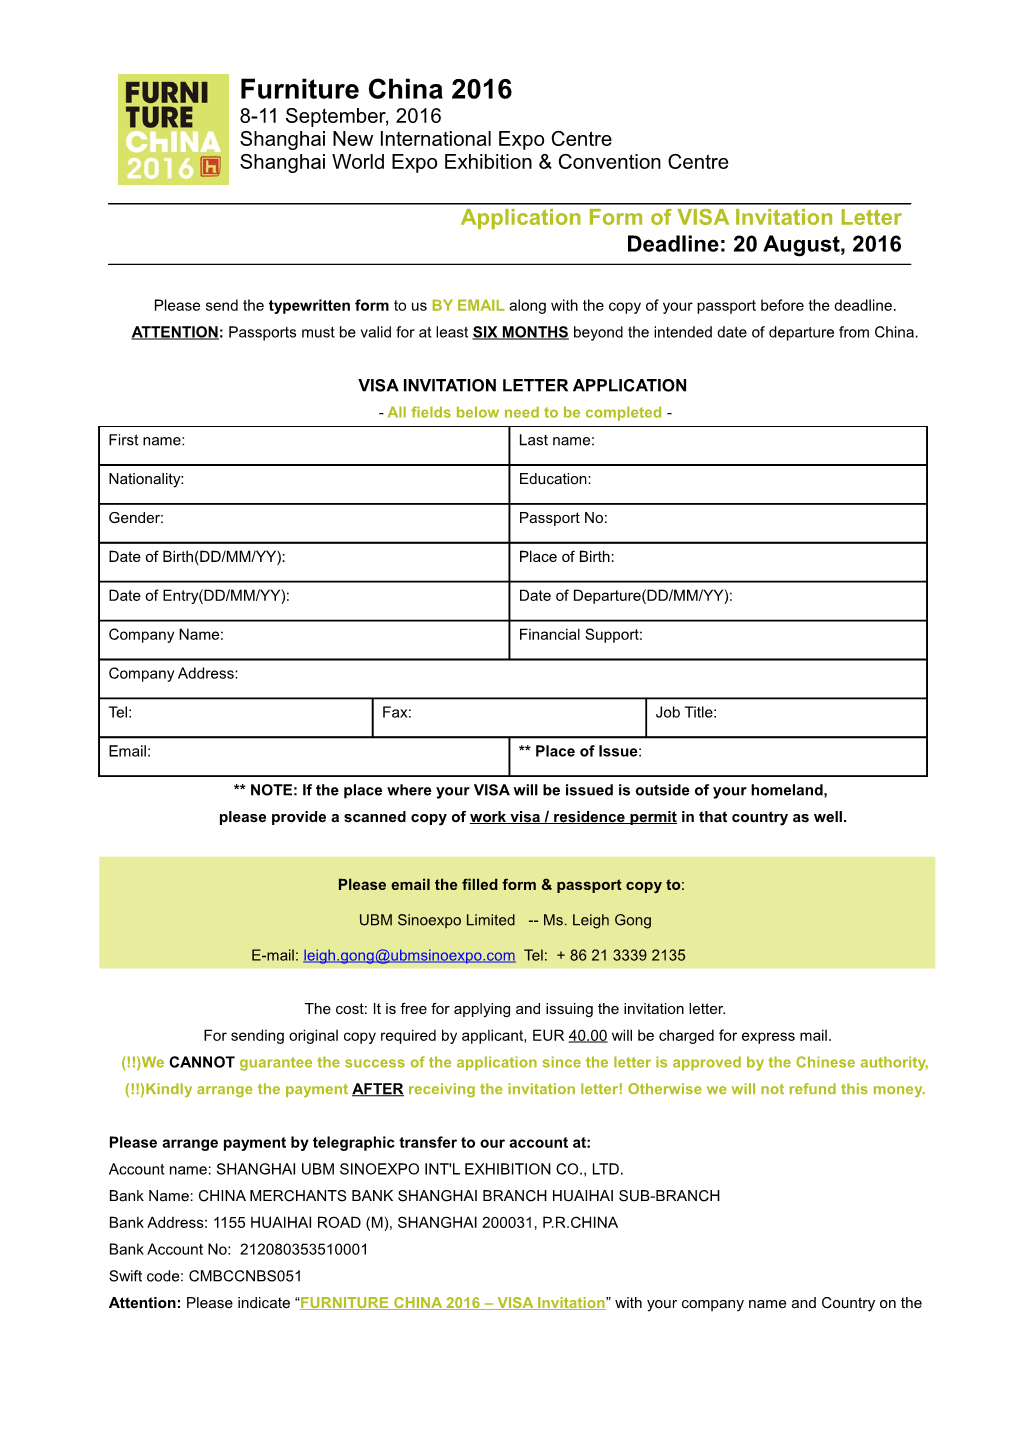 Application Form of VISA Invitation Letter